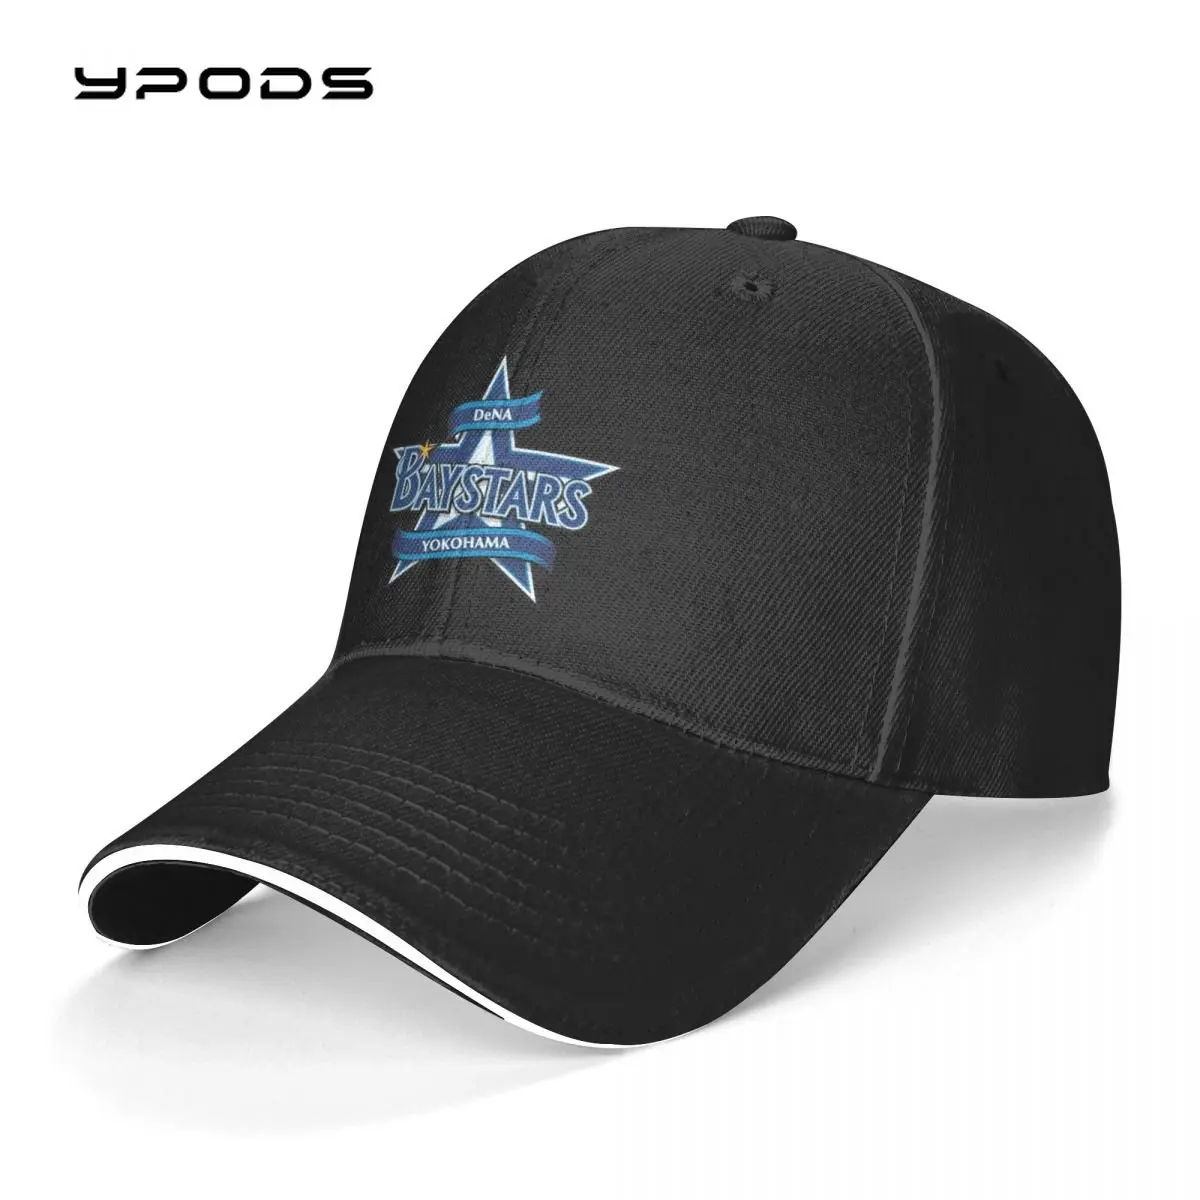 

Yokohama Dena Baystars Men's New Baseball Cap Fashion Sun Hats Caps for Men and Women